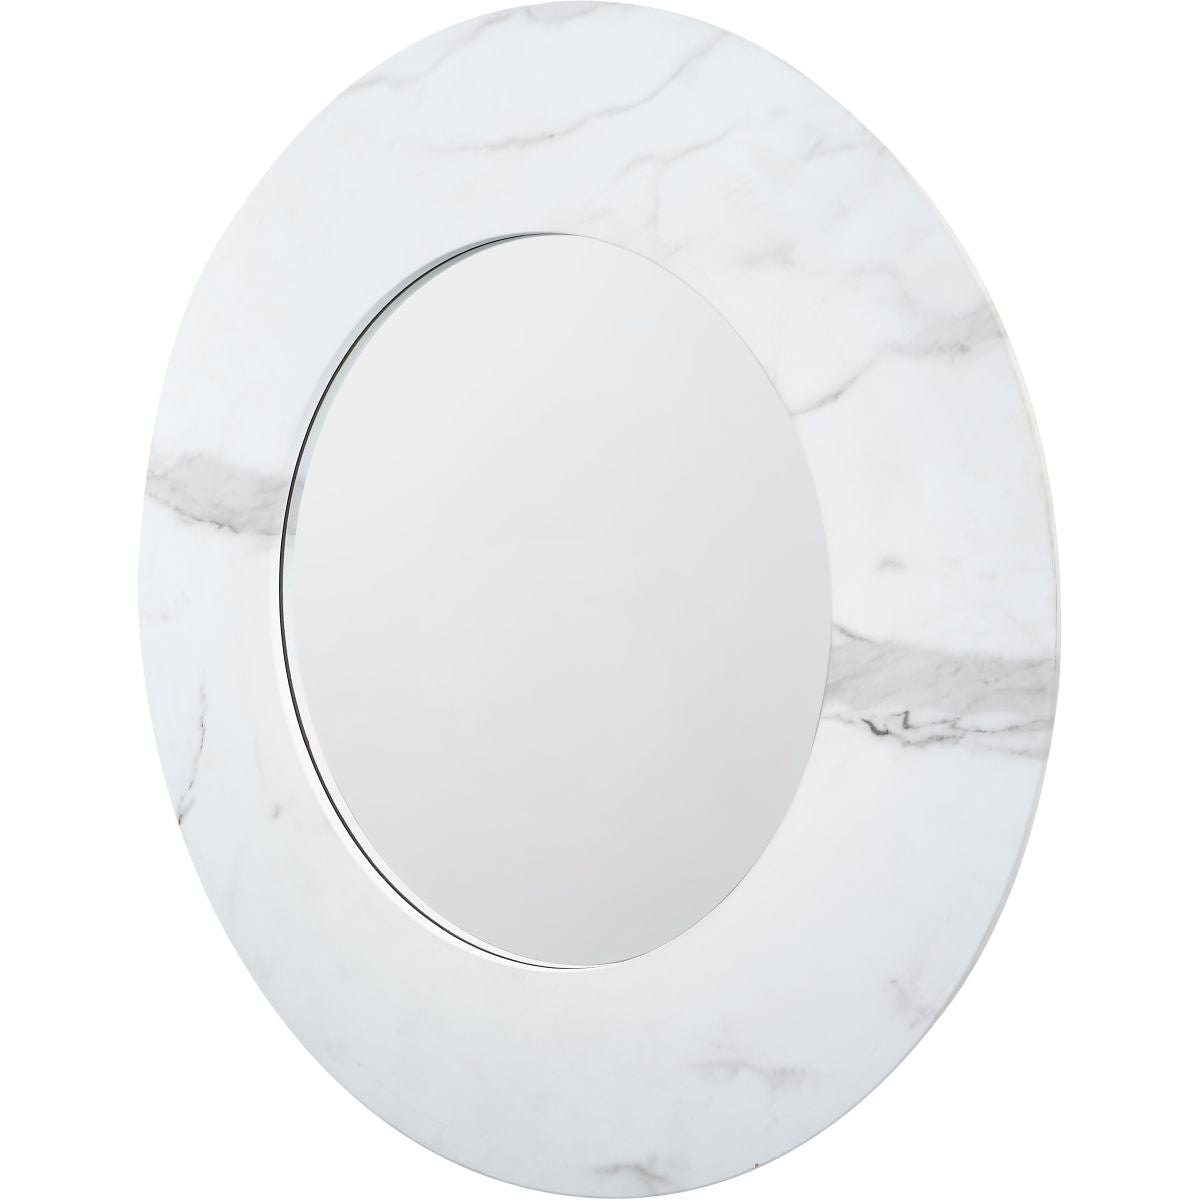 White Marble Veneer Round Wall Mirror